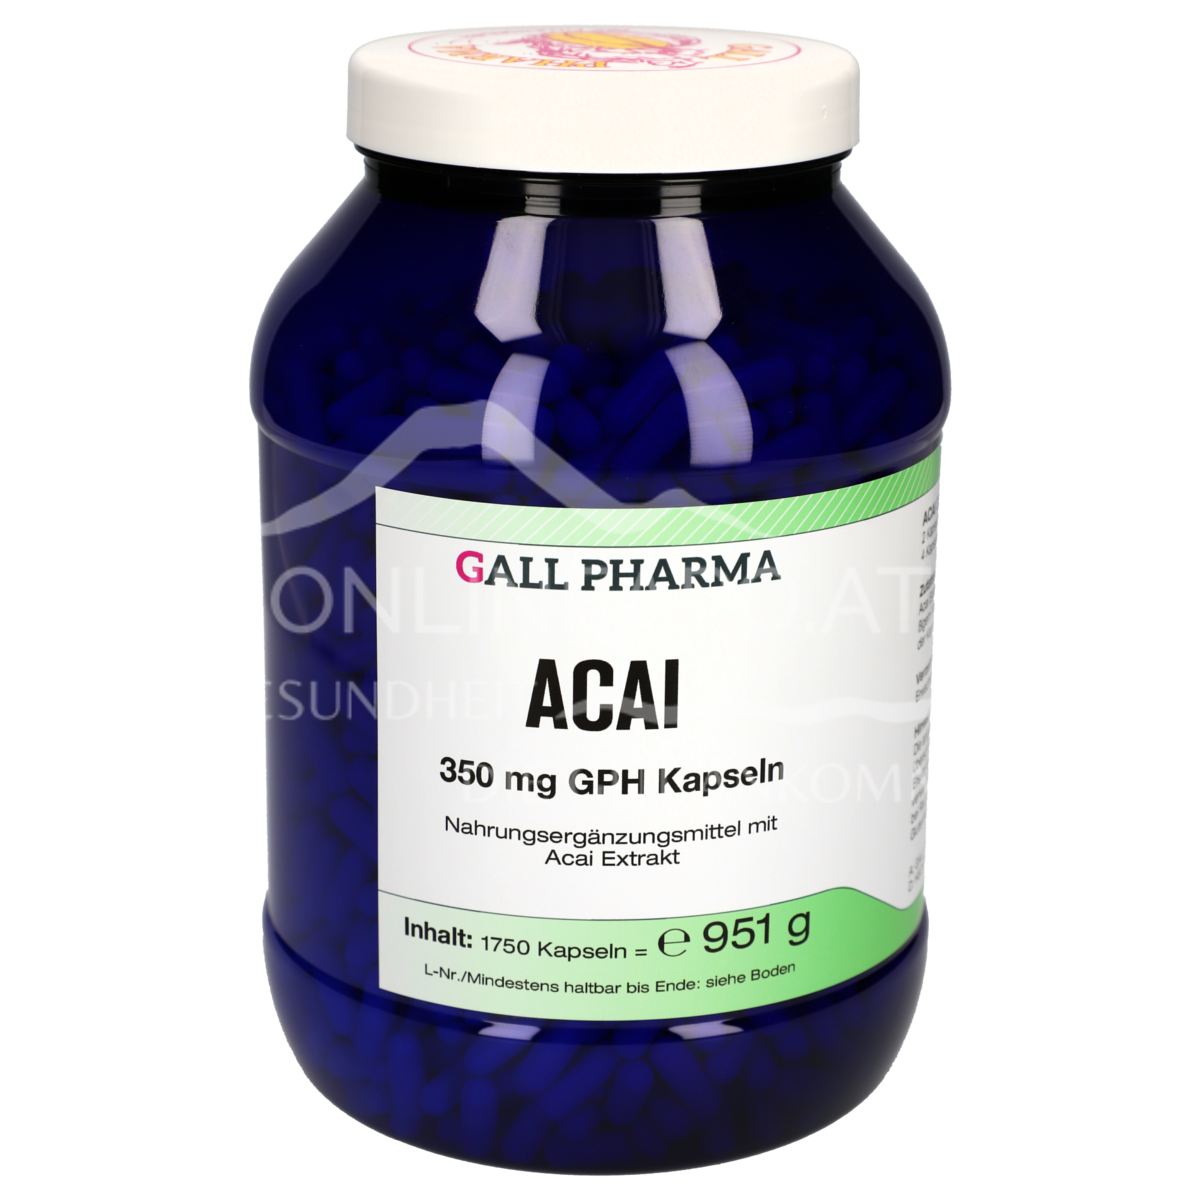 Gall Pharma Acai 350 mg Kapseln